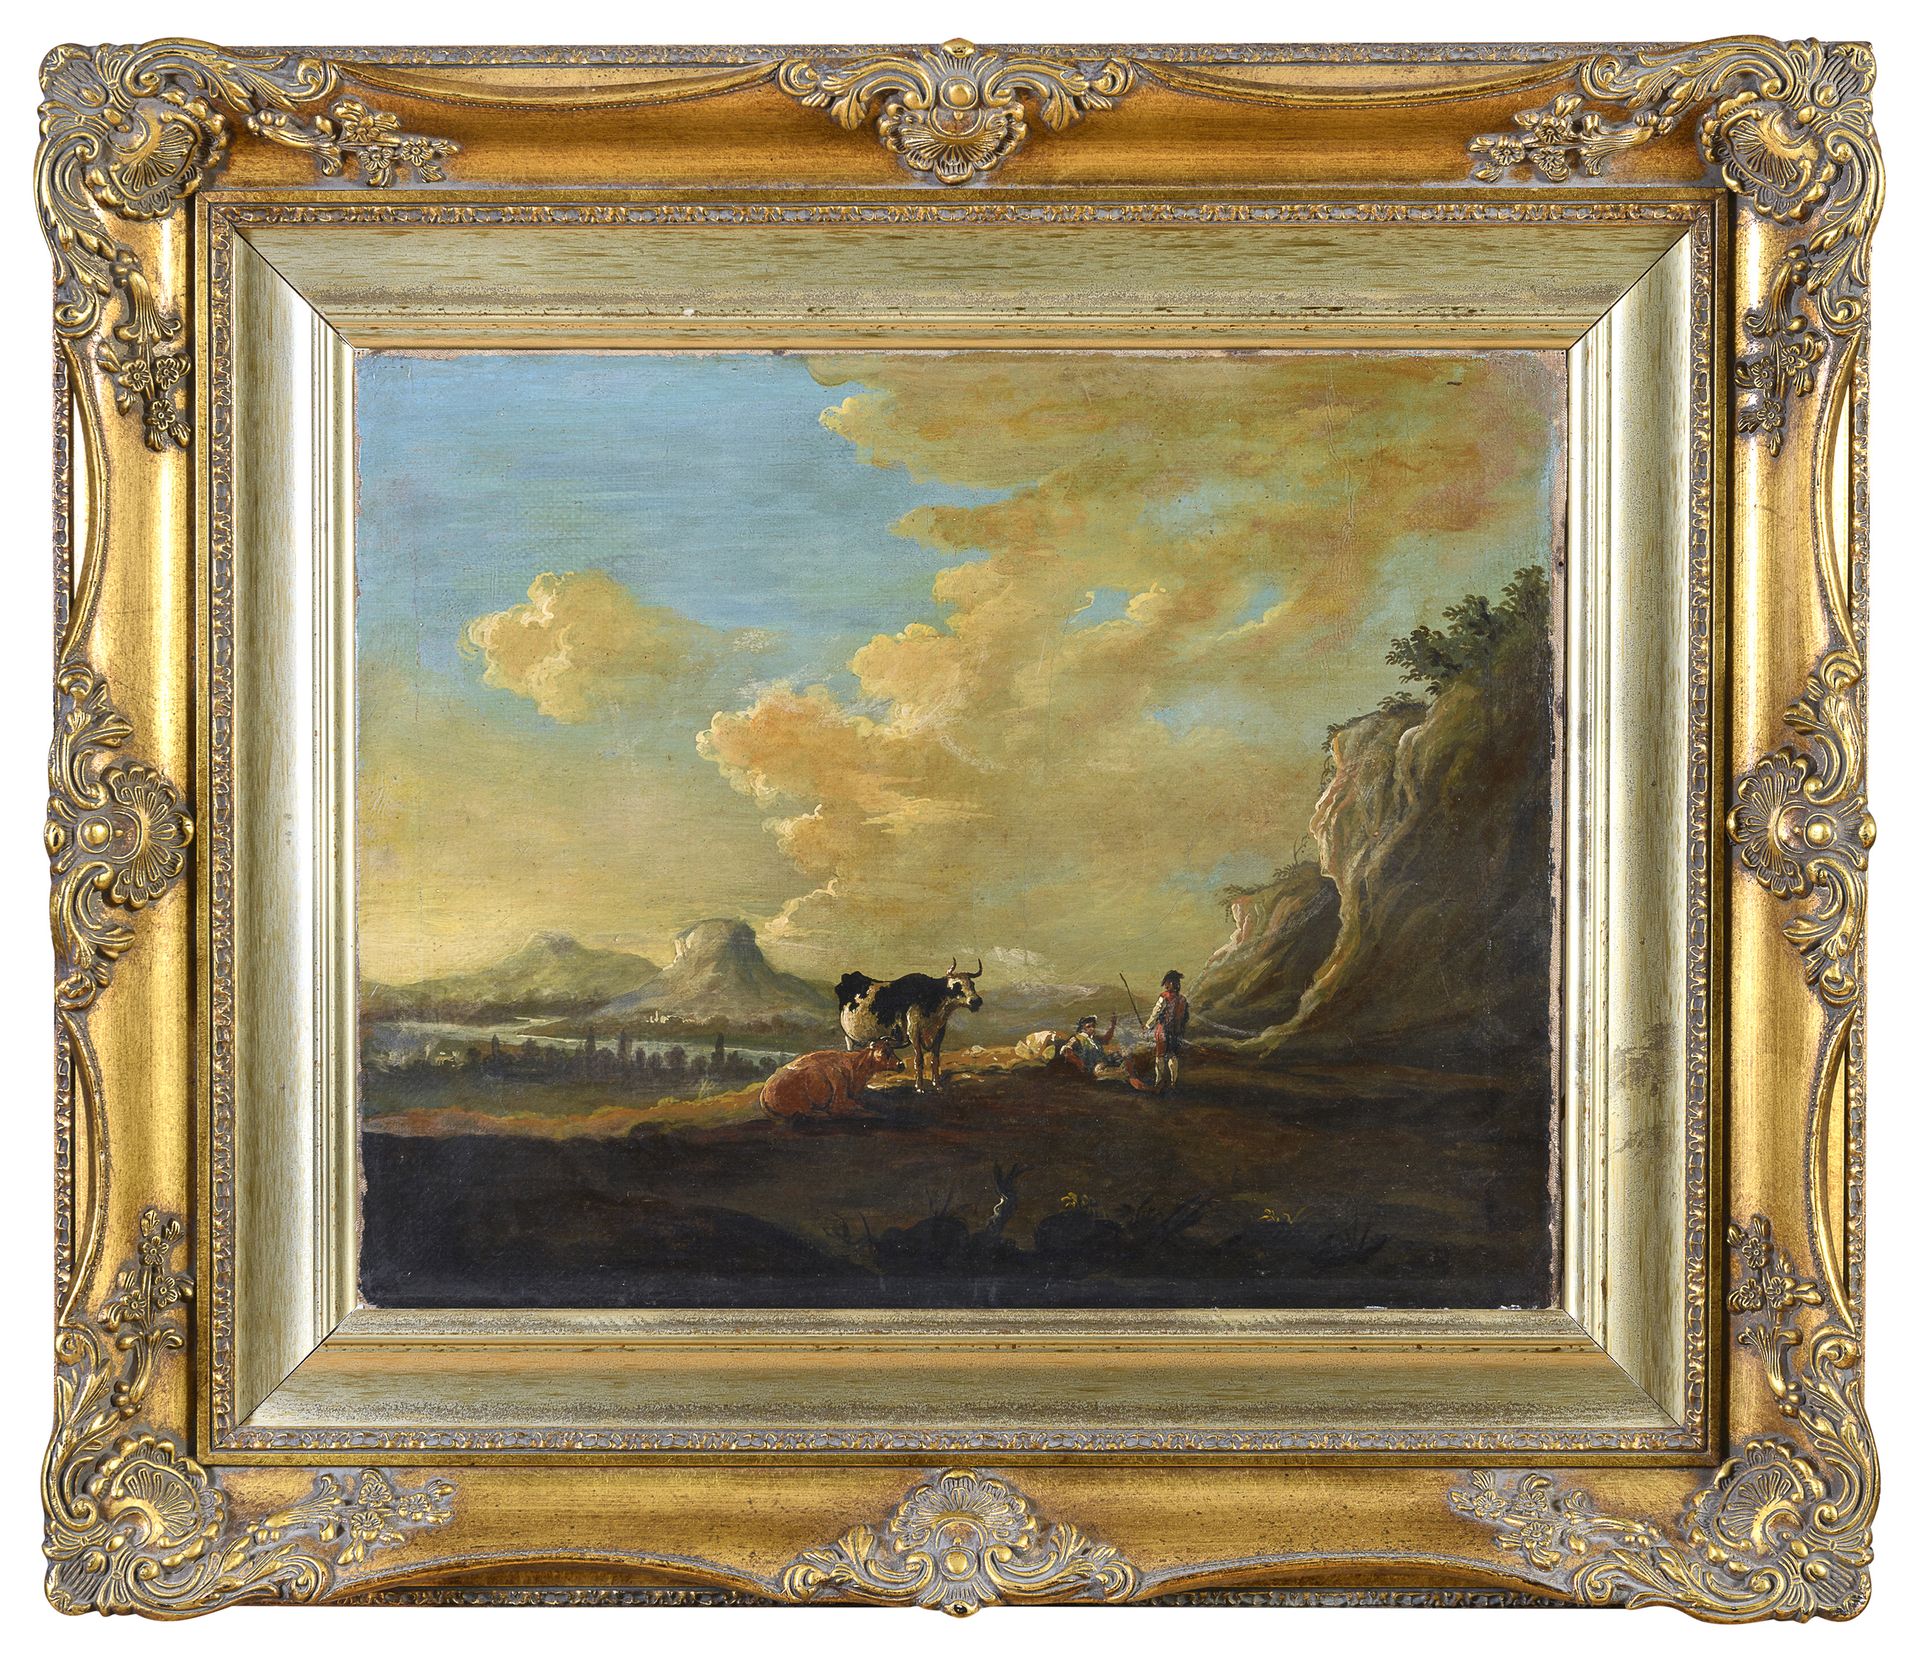 Null 荷兰画家，19世纪初



牧羊人和牛群的休息景观

布面油画，cm. 40 x 48

镀金框架